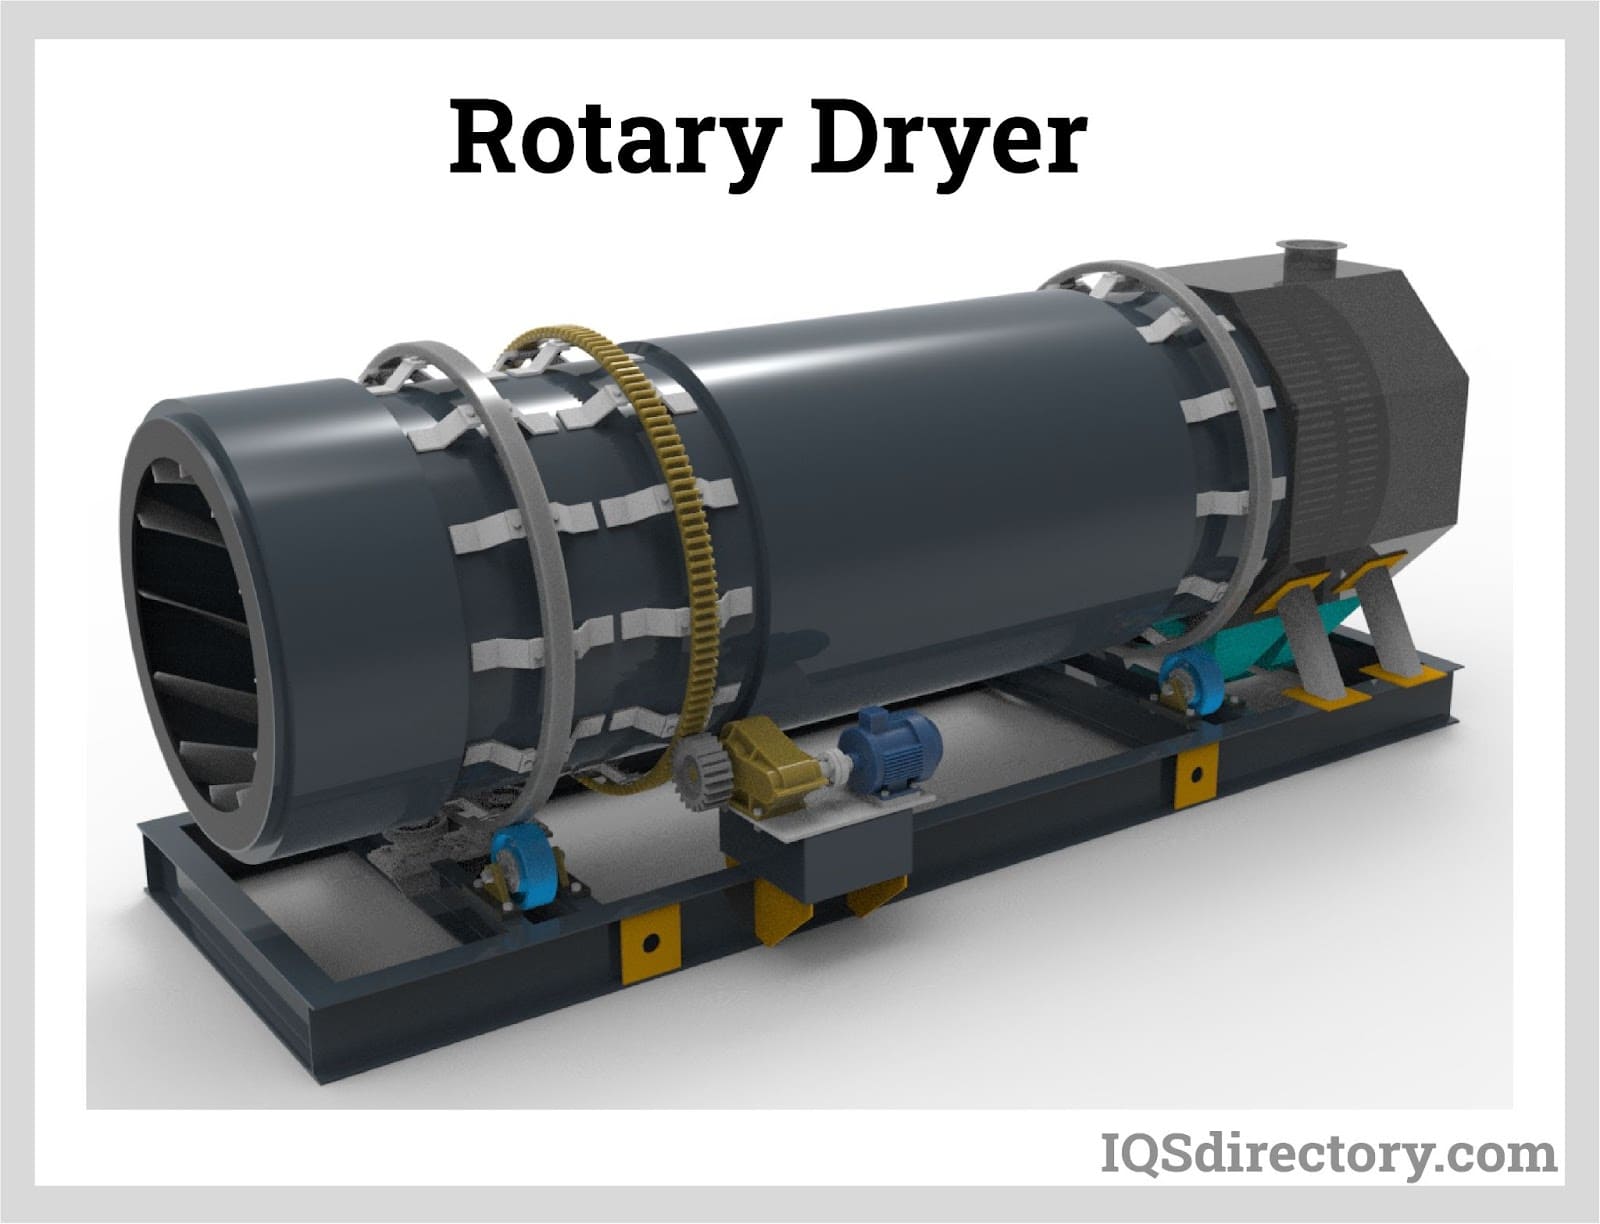 Rotary dryers